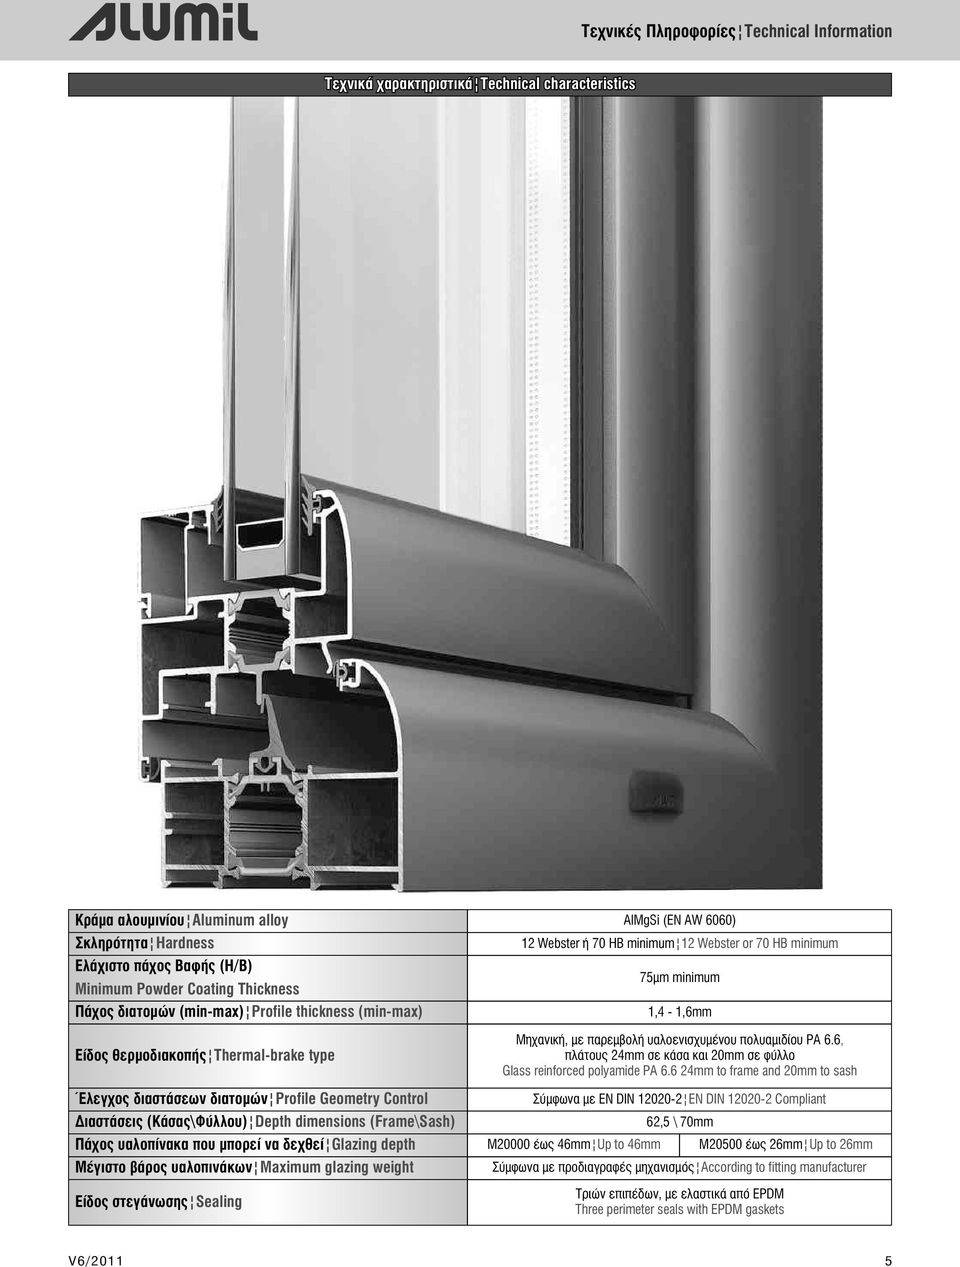 (Frame\Sash) Πάχος υαλοπίνακα που μπορεί να δεχθεί Glazing depth Μέγιστο βάρος υαλοπινάκων Maximum glazing weight Είδος στεγάνωσης Sealing AlMgSi (EN AW 6060) Webster ή 70 HB minimum Webster or 70 HB